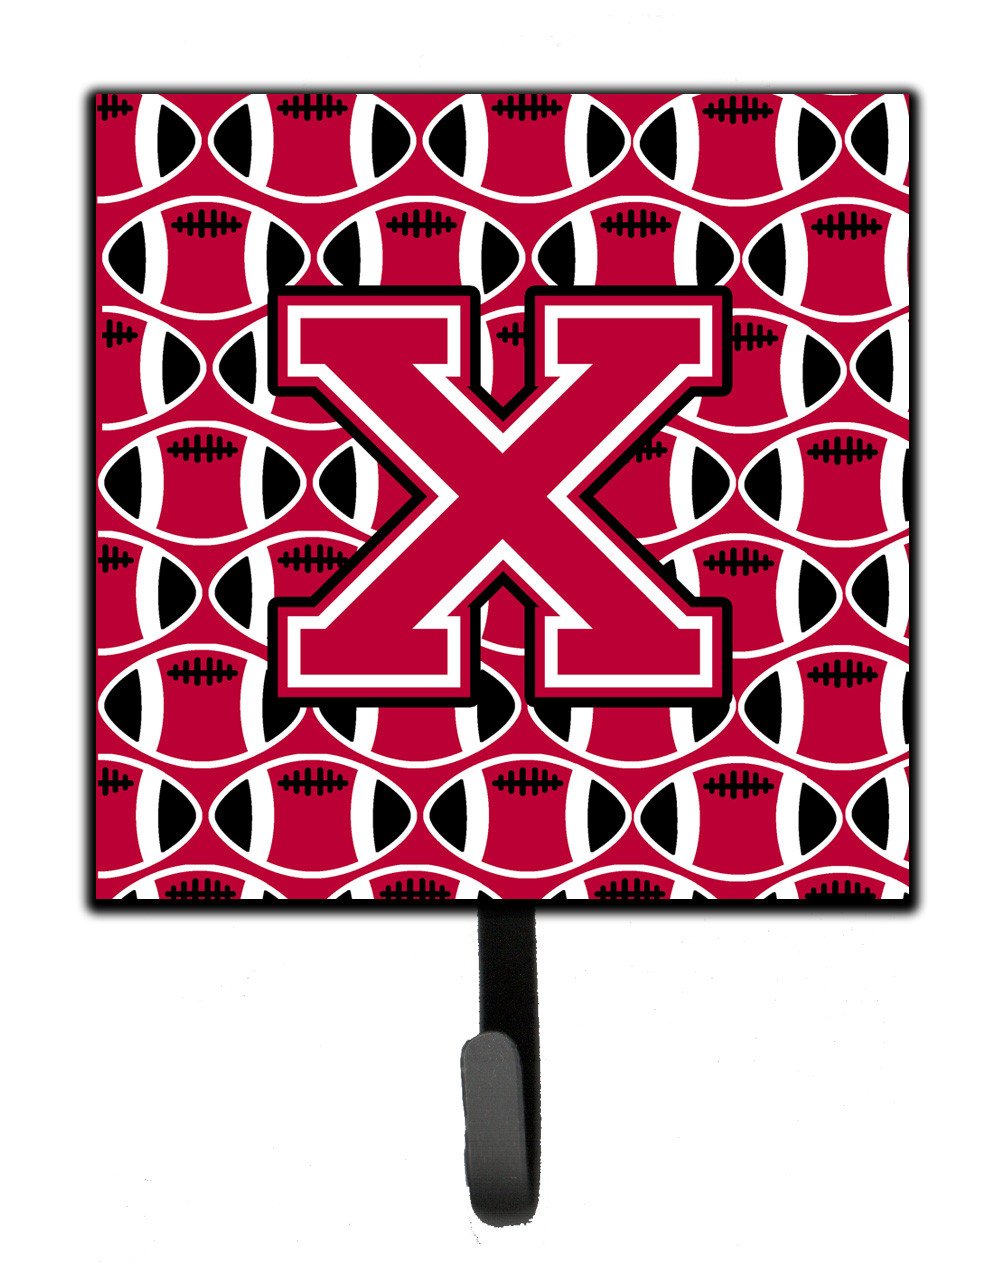 Letter X Football Crimson and White Leash or Key Holder CJ1079-XSH4 by Caroline's Treasures